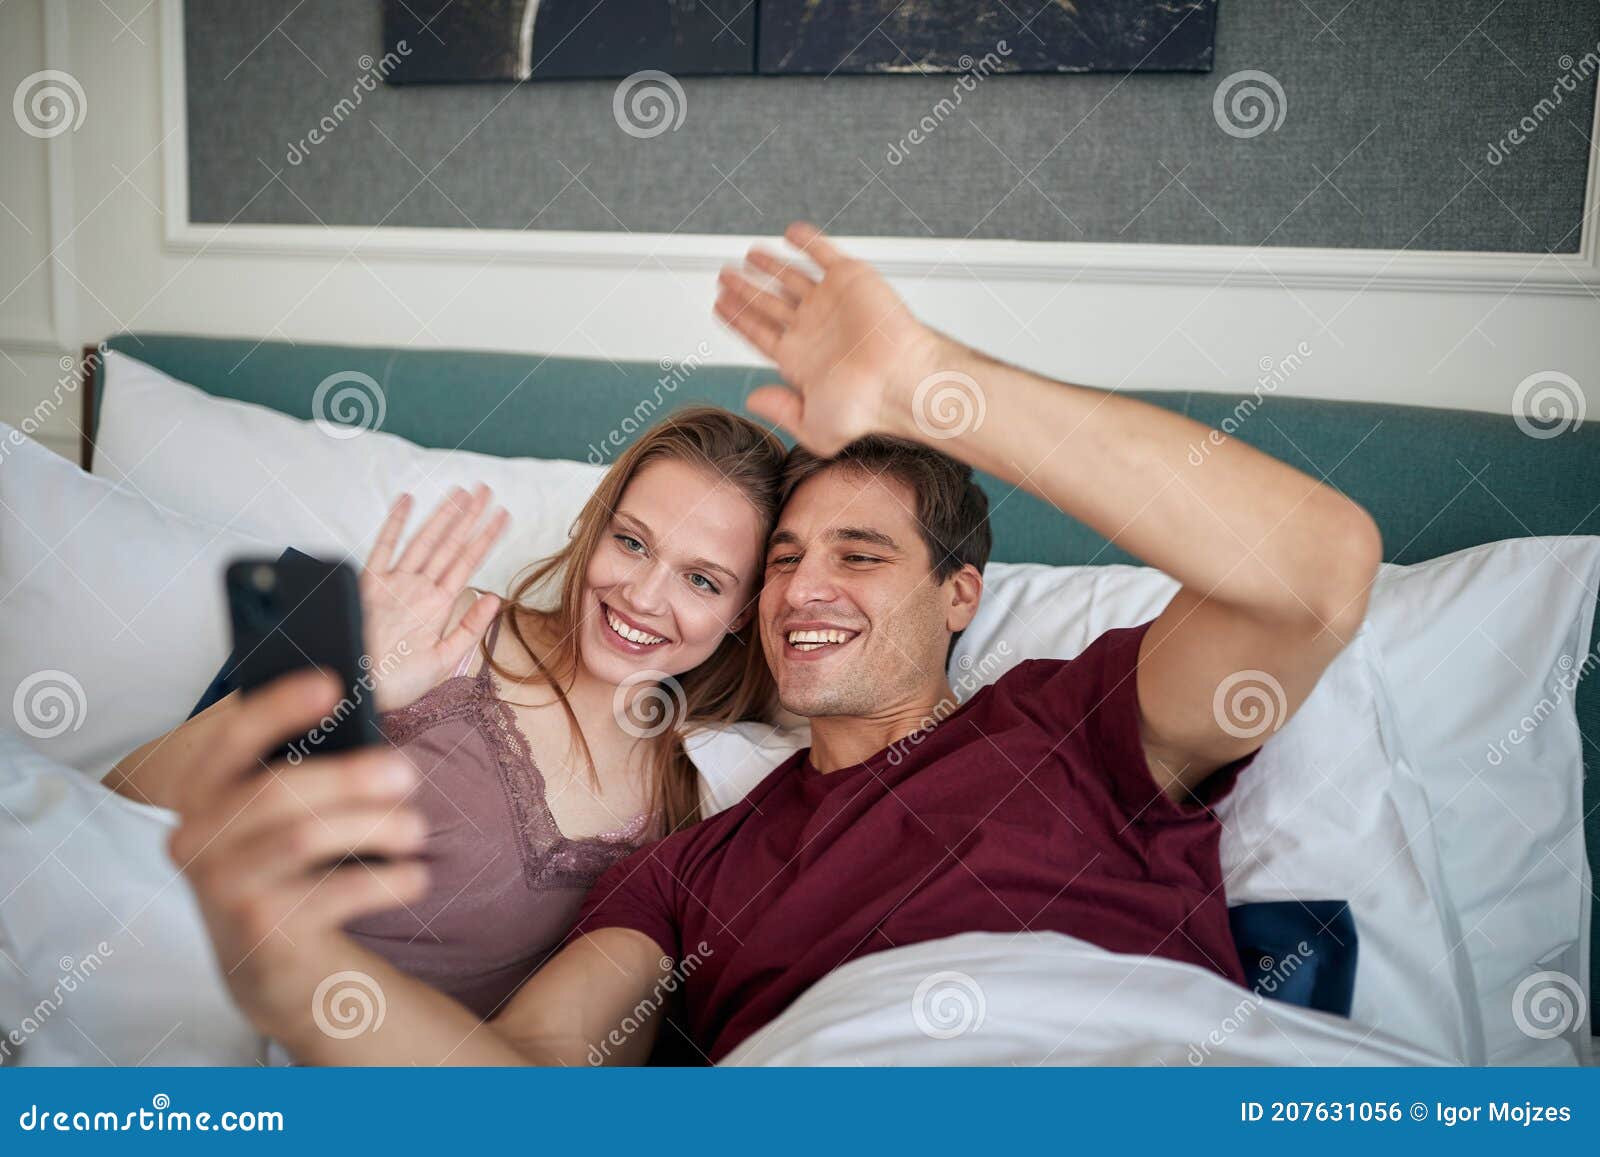 Girlfriend cheats hotel best adult free photos